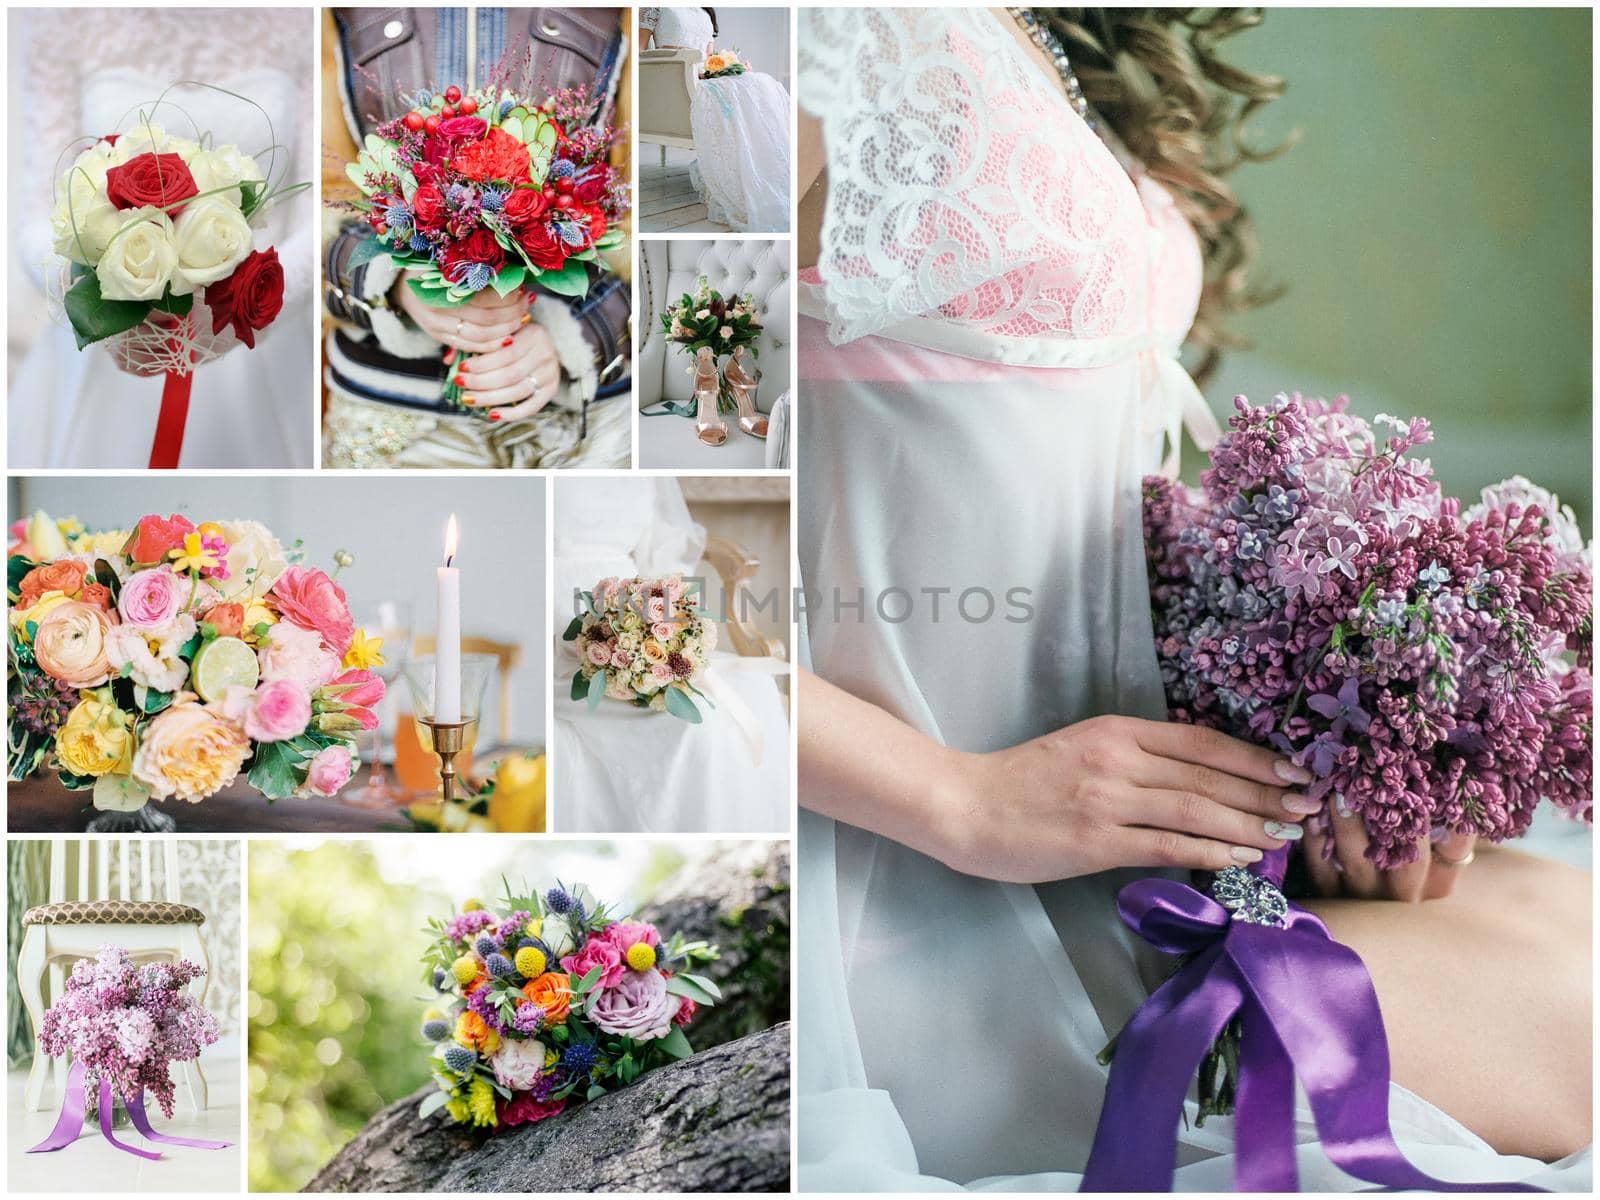 Wedding bouquet collage. Wedding flowers from different ceremonies